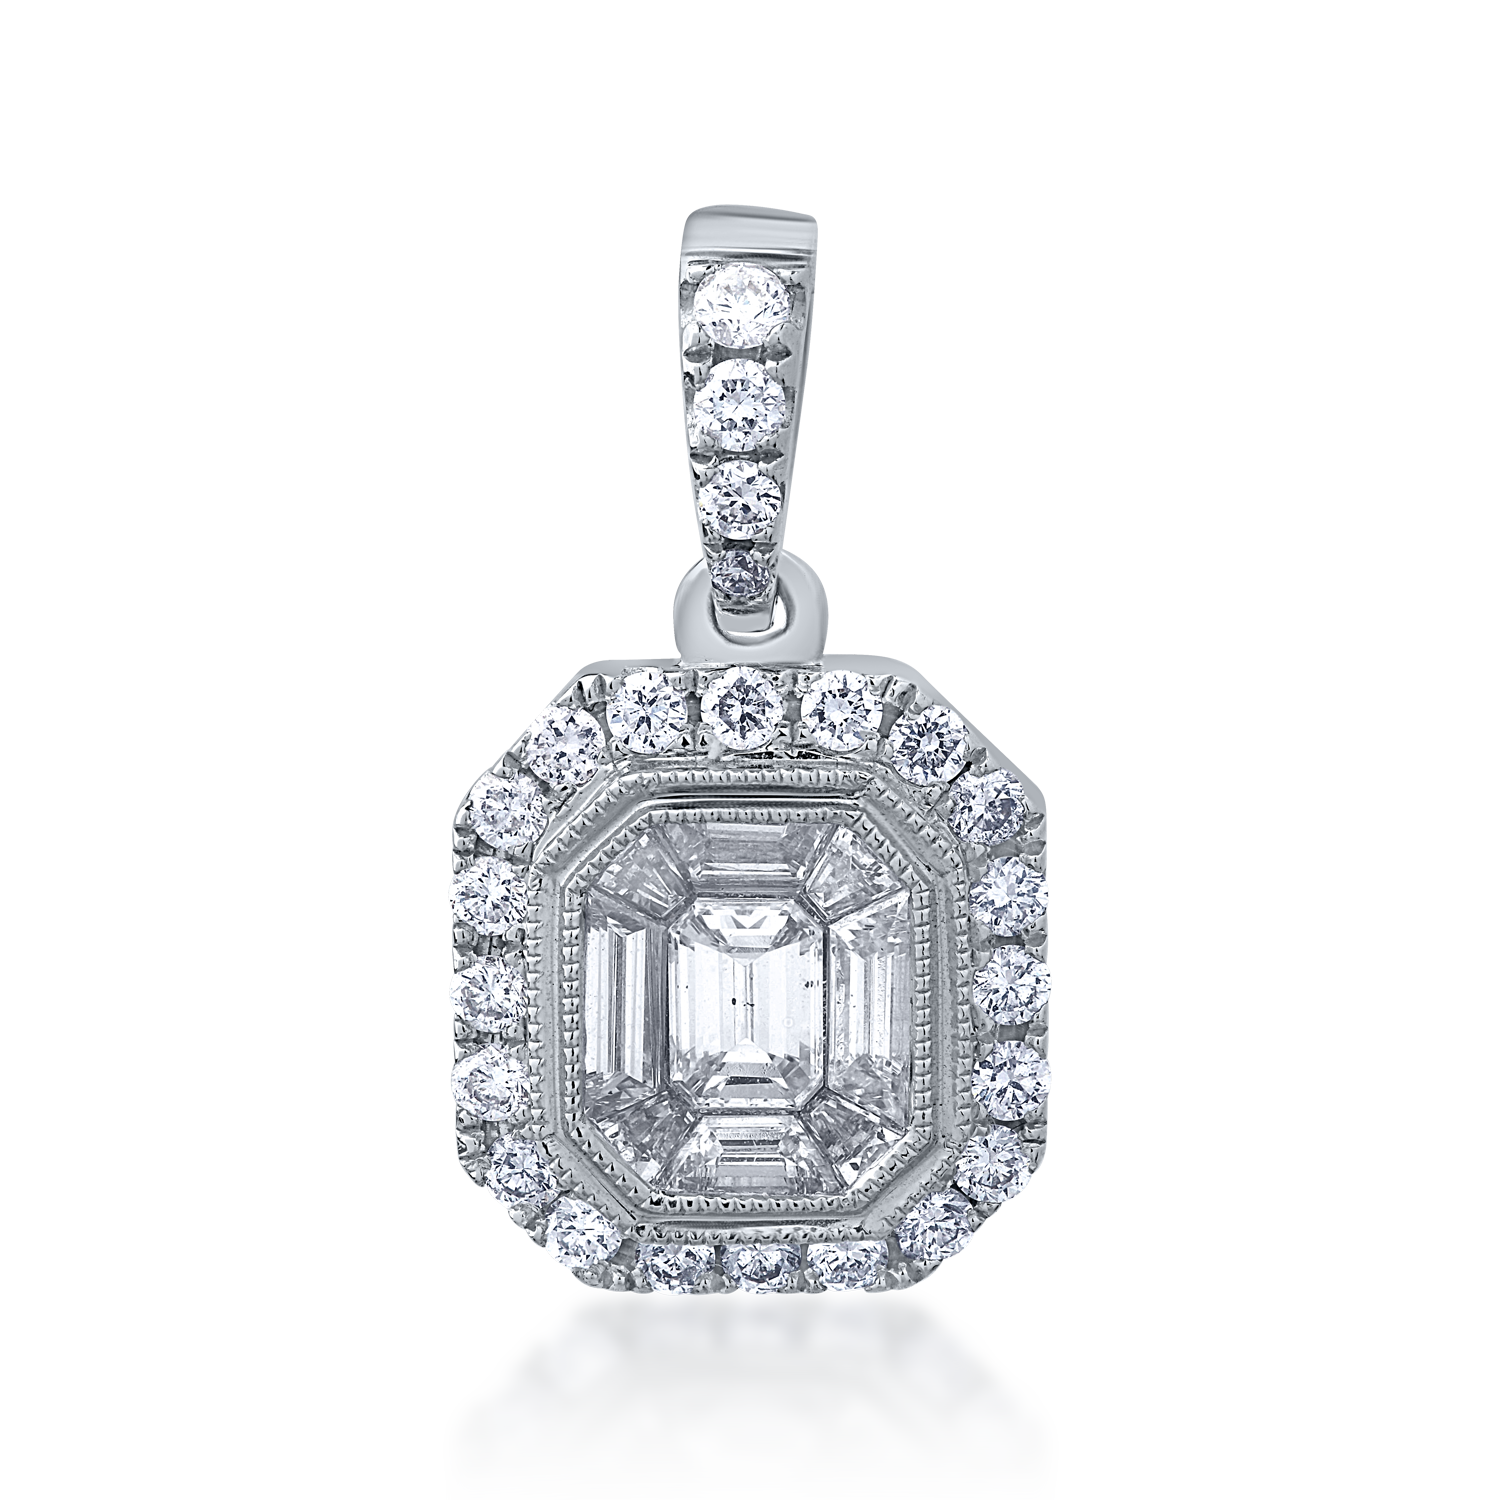 18K white gold pendant with 0.55ct diamonds